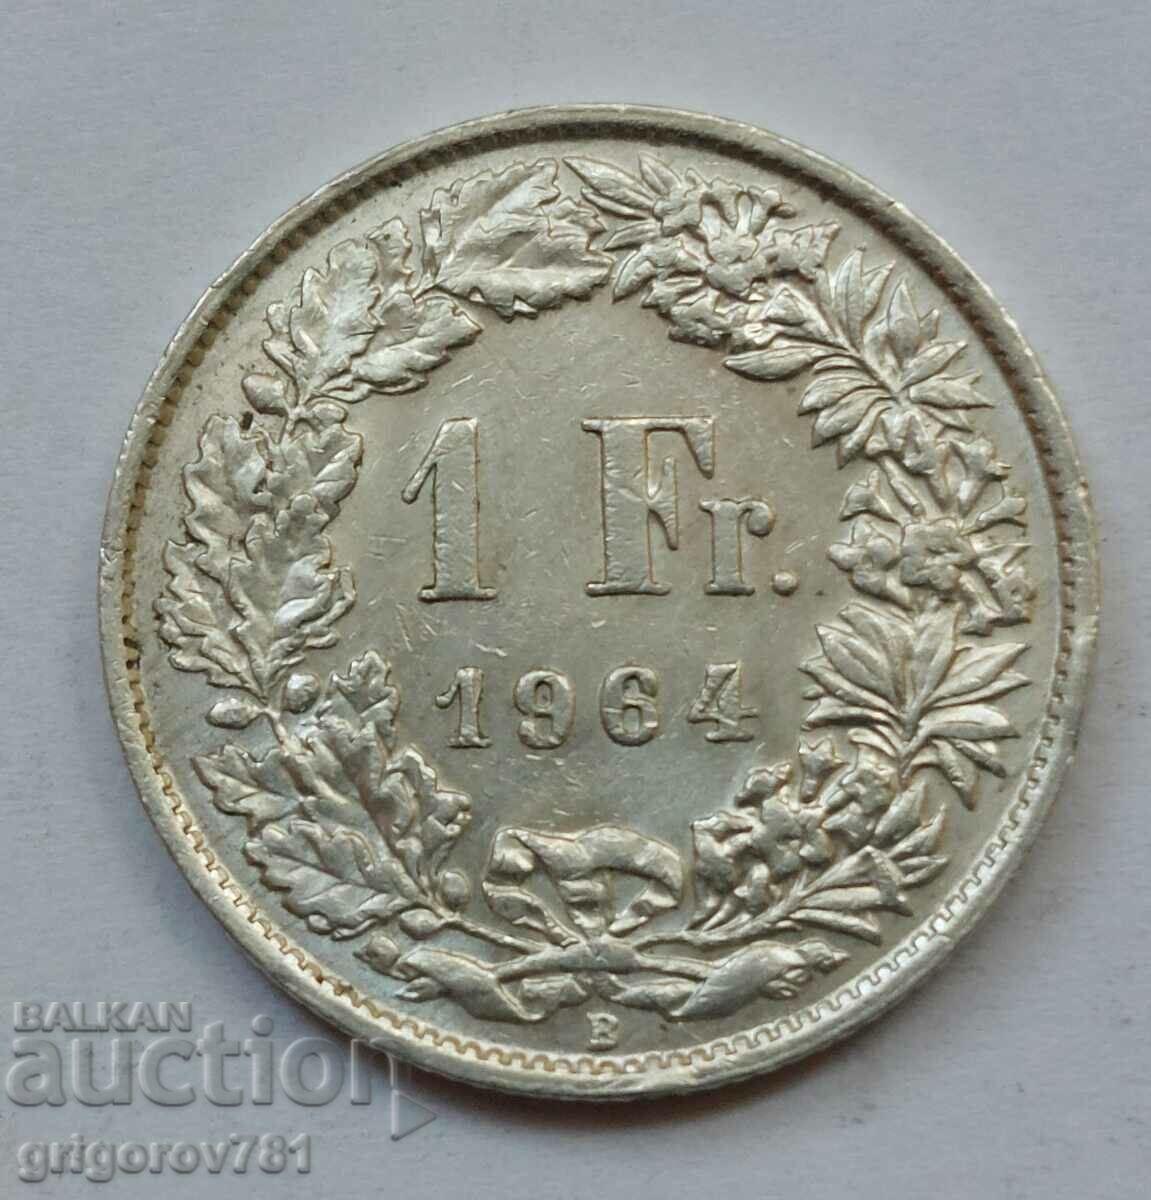 1 Franc Silver Switzerland 1964 B - Silver Coin #4